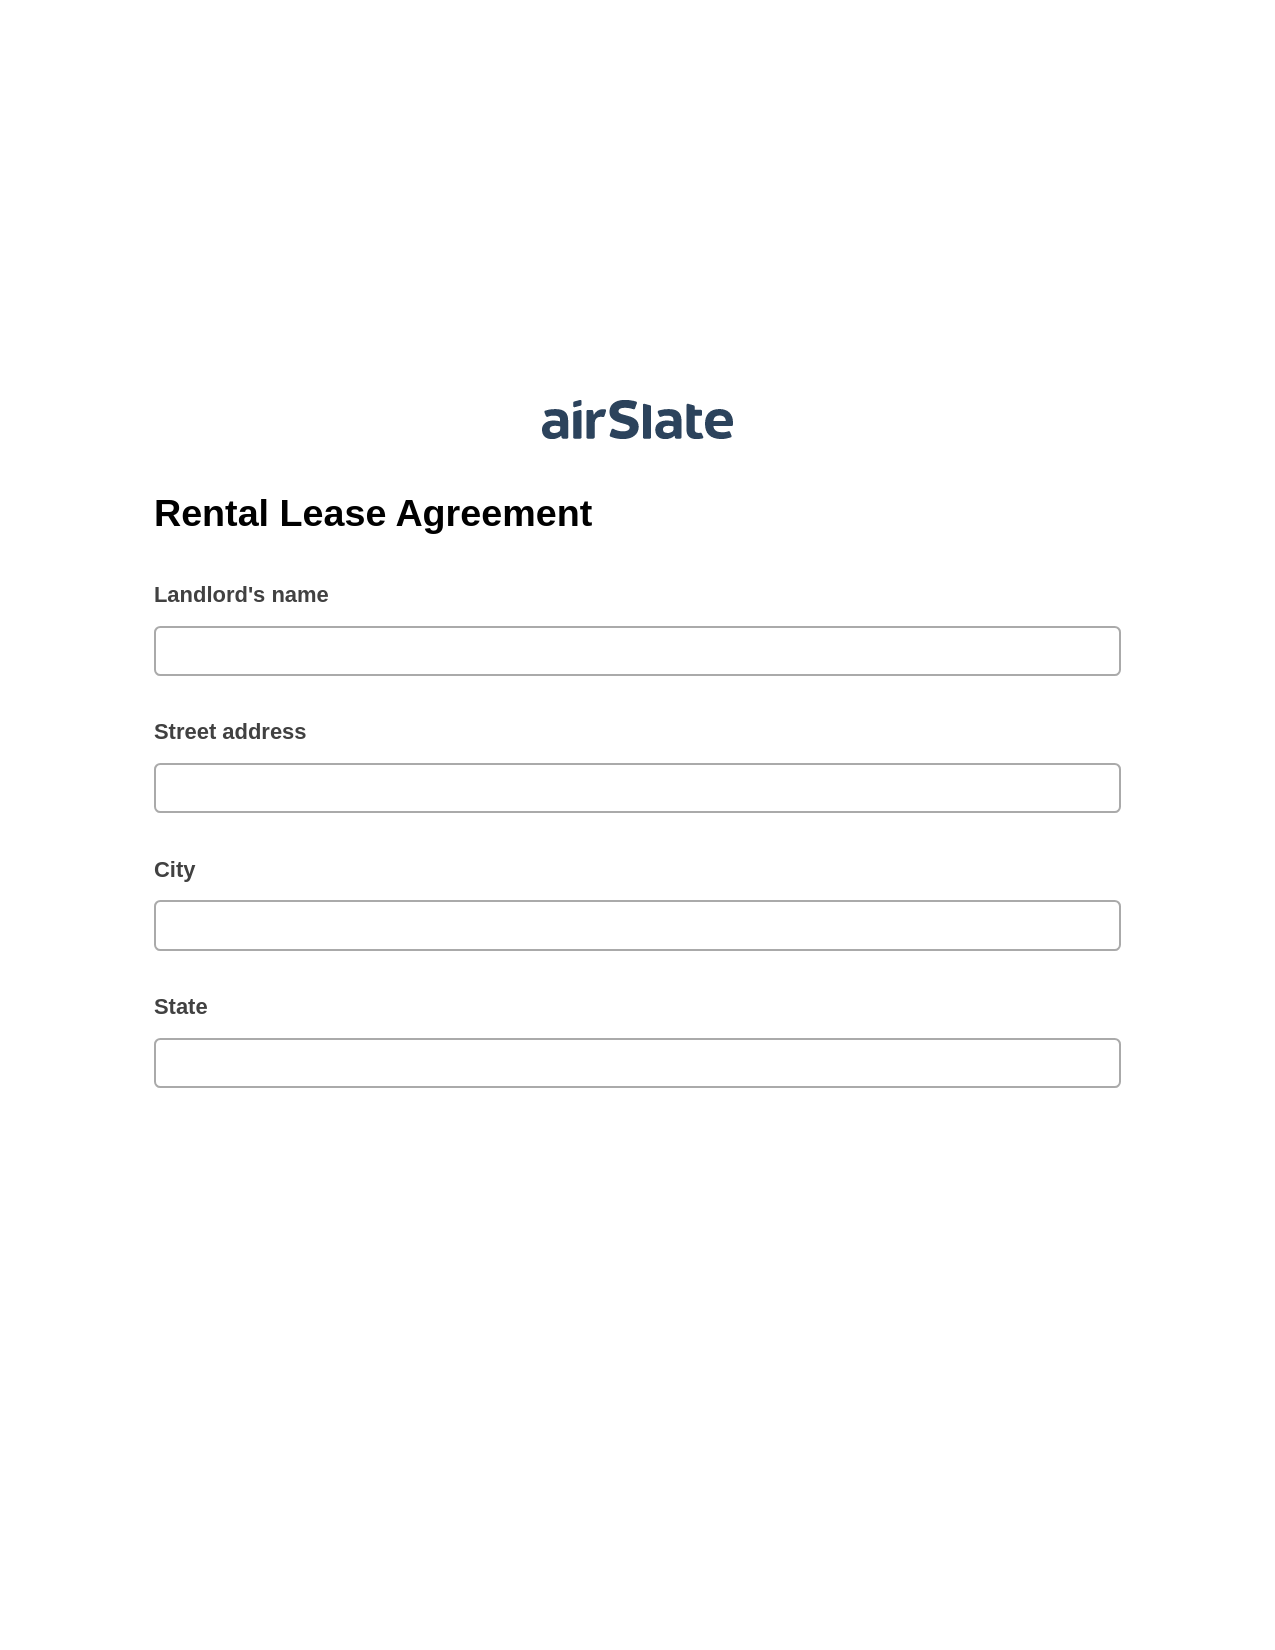 Multirole Rental Lease Agreement Pre-fill from Google Sheet Dropdown Options Bot, Google Cloud Print Bot, OneDrive Bot